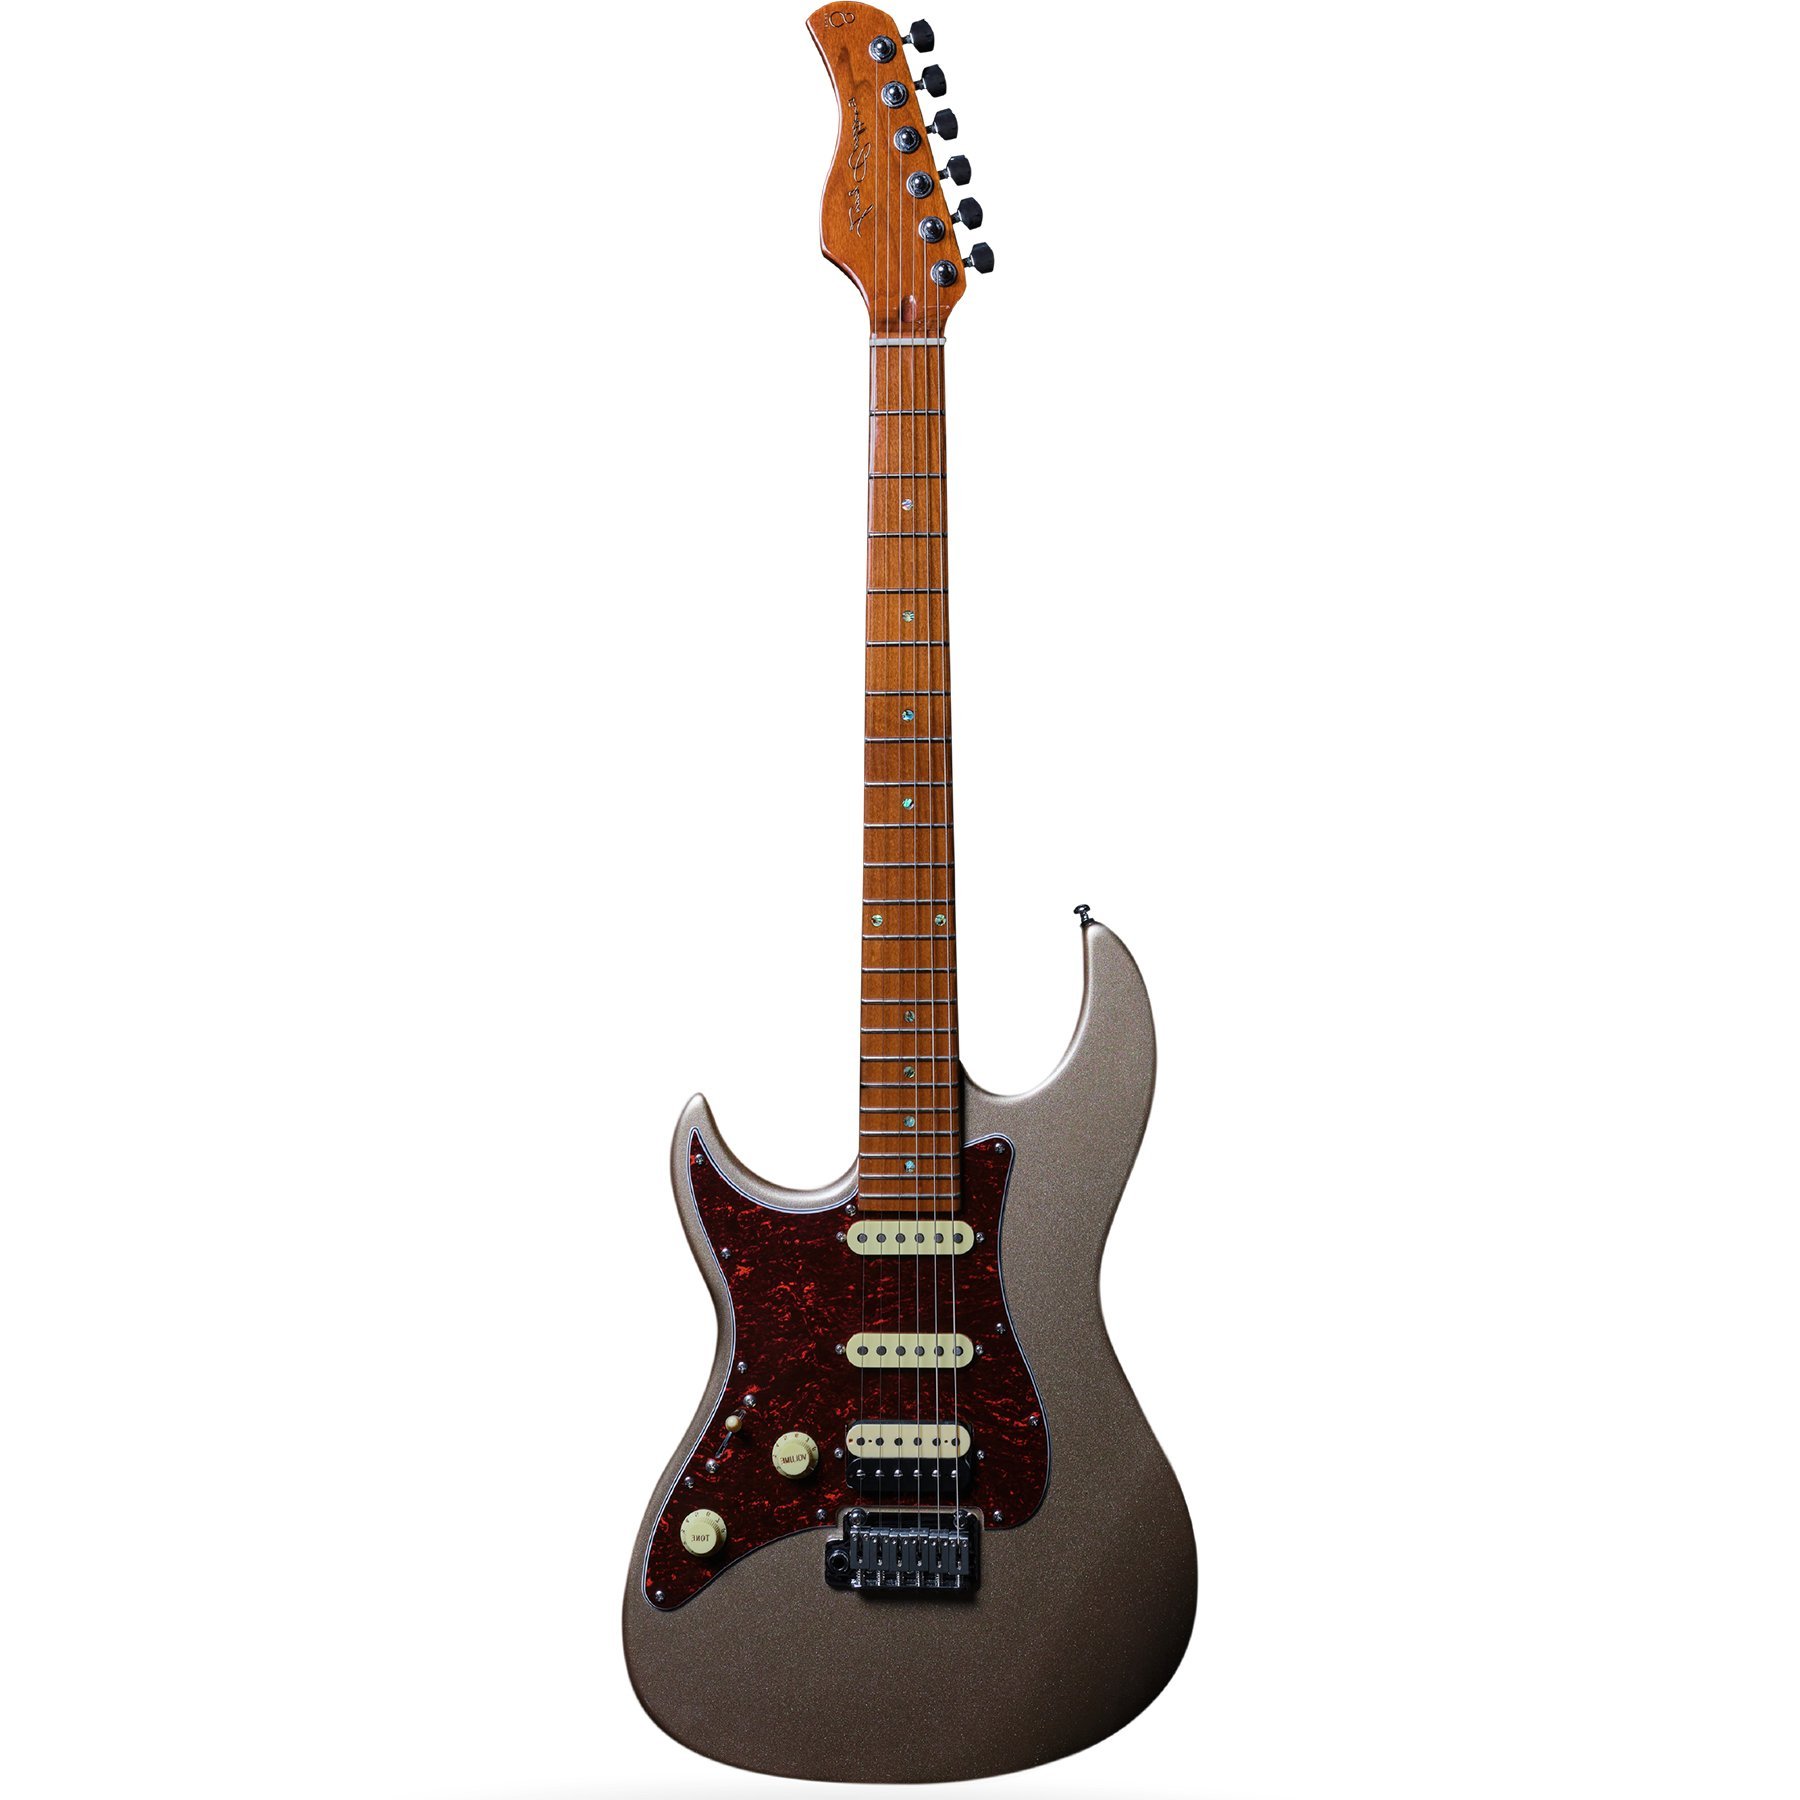 Sire Larry Carlton S7 Solak Elektro Gitar (CGM)